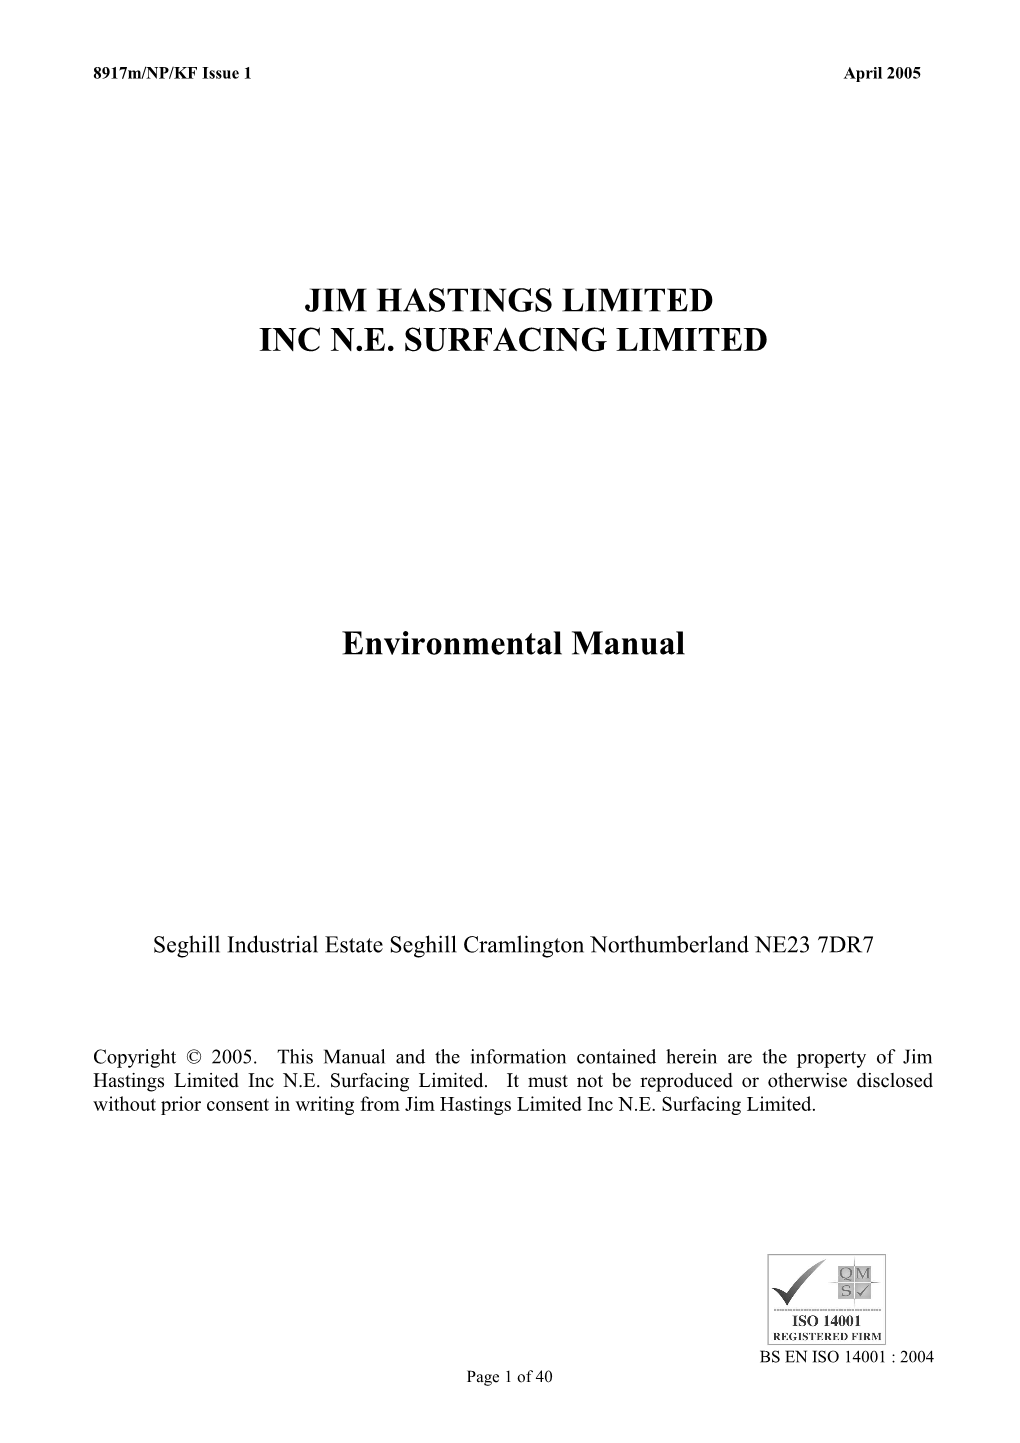 Jim Hastings Limited